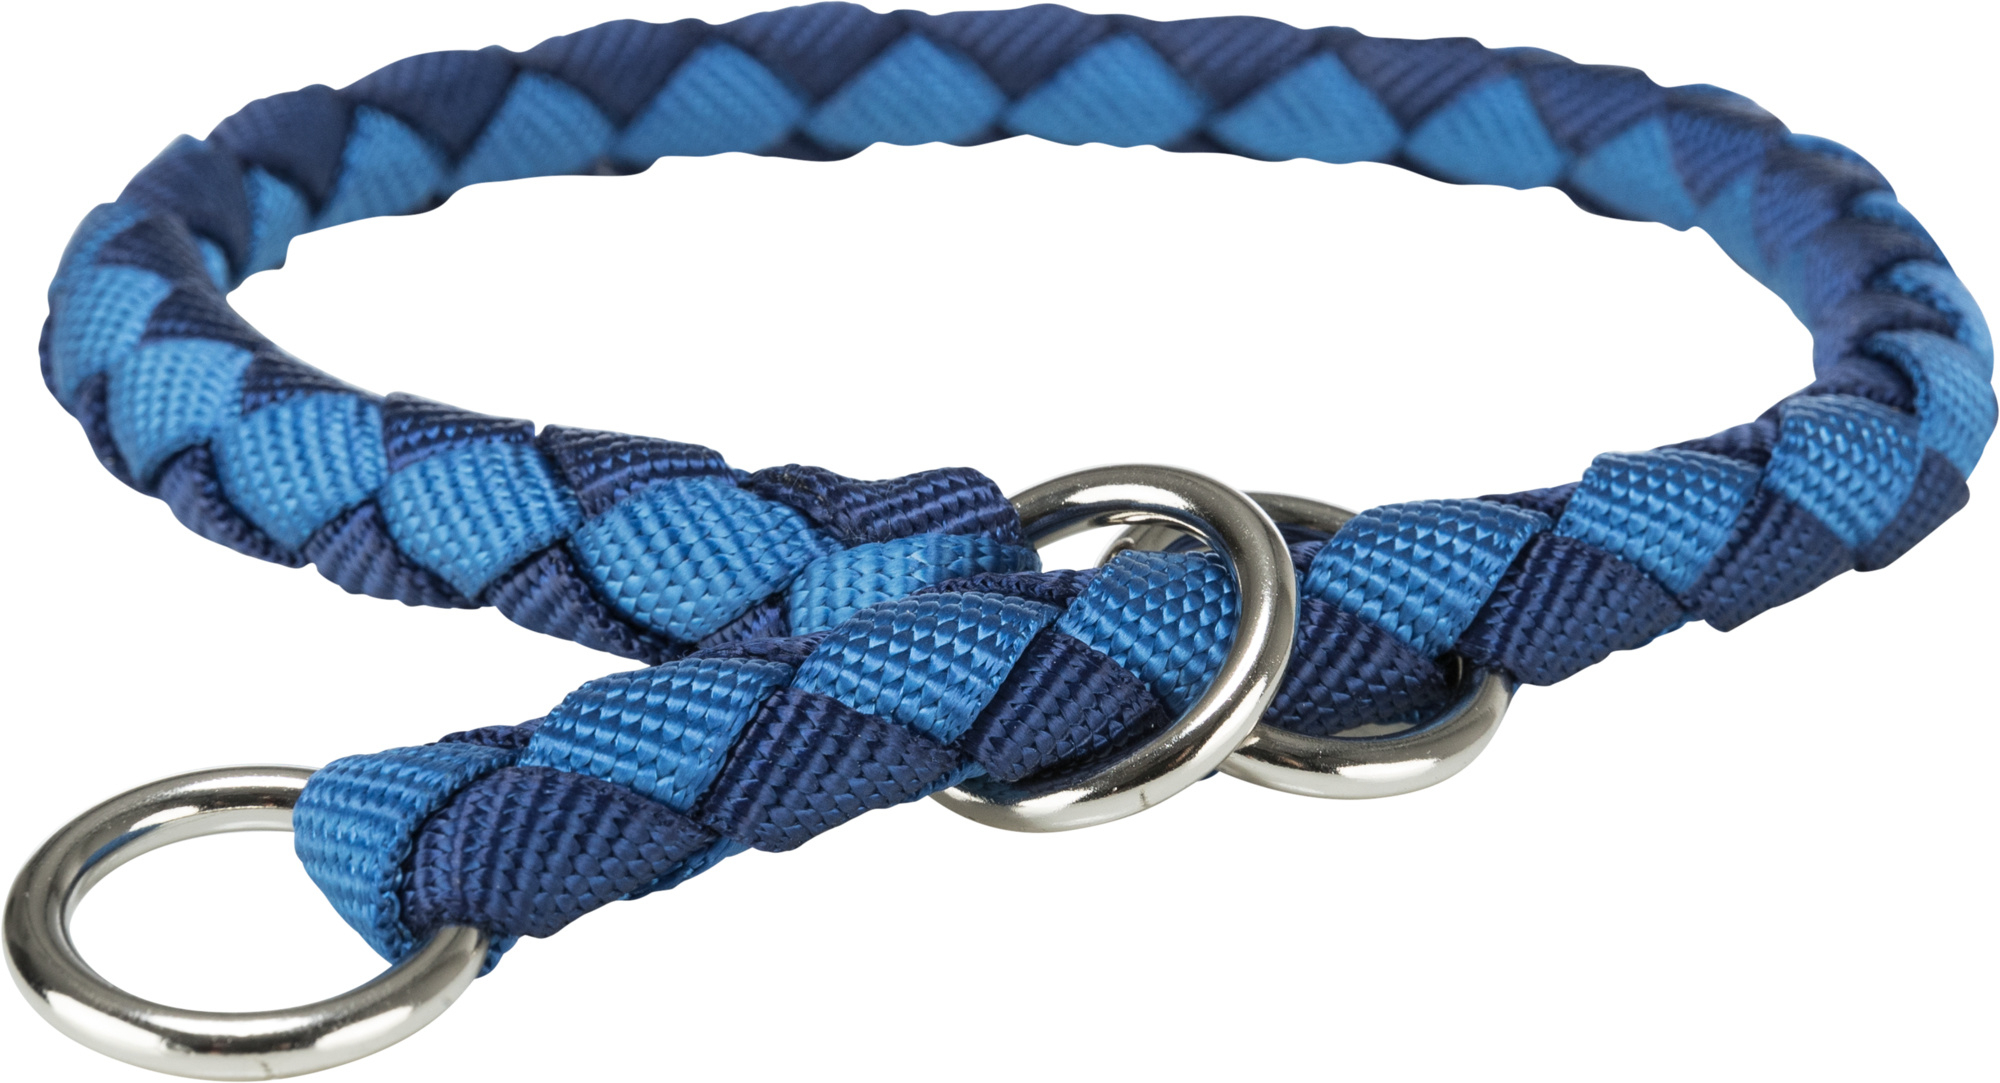 Collier Cavo Semi étrangleur indigo/bleu - plusieurs tailles disponibles